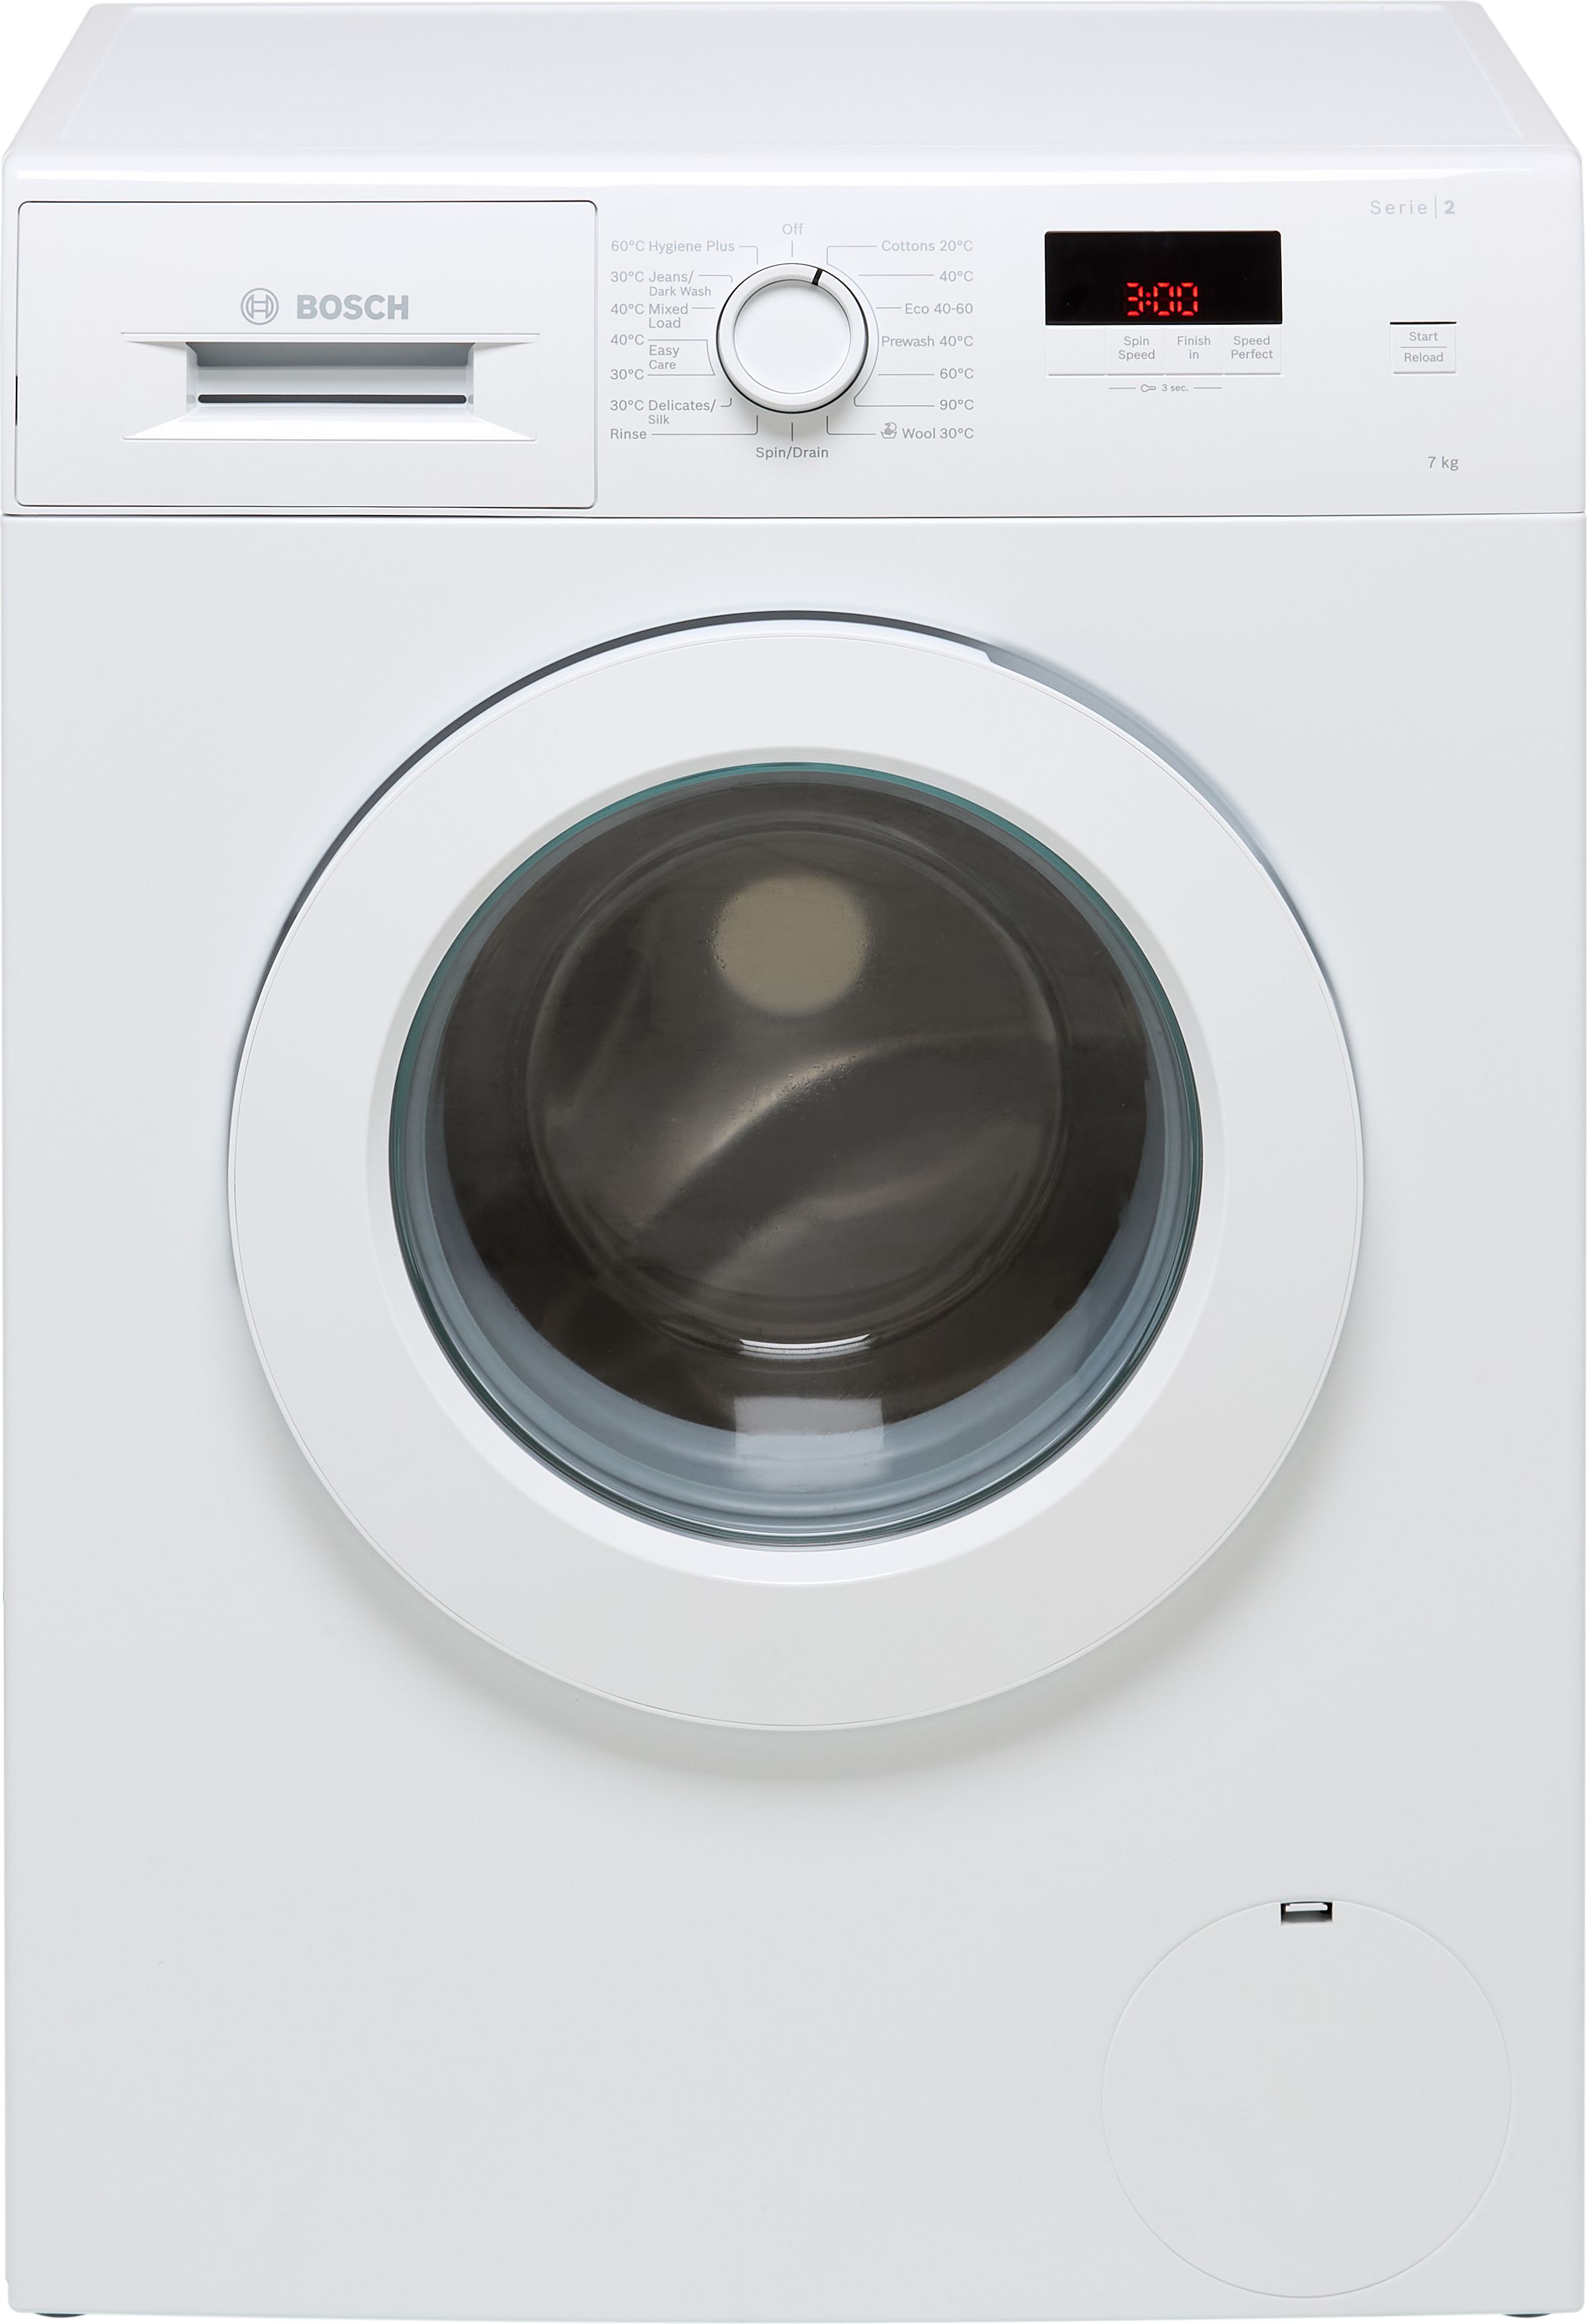 Bosch Series 2 WAJ28001GB 7kg Washing Machine with 1400 rpm - White - B Rated, White